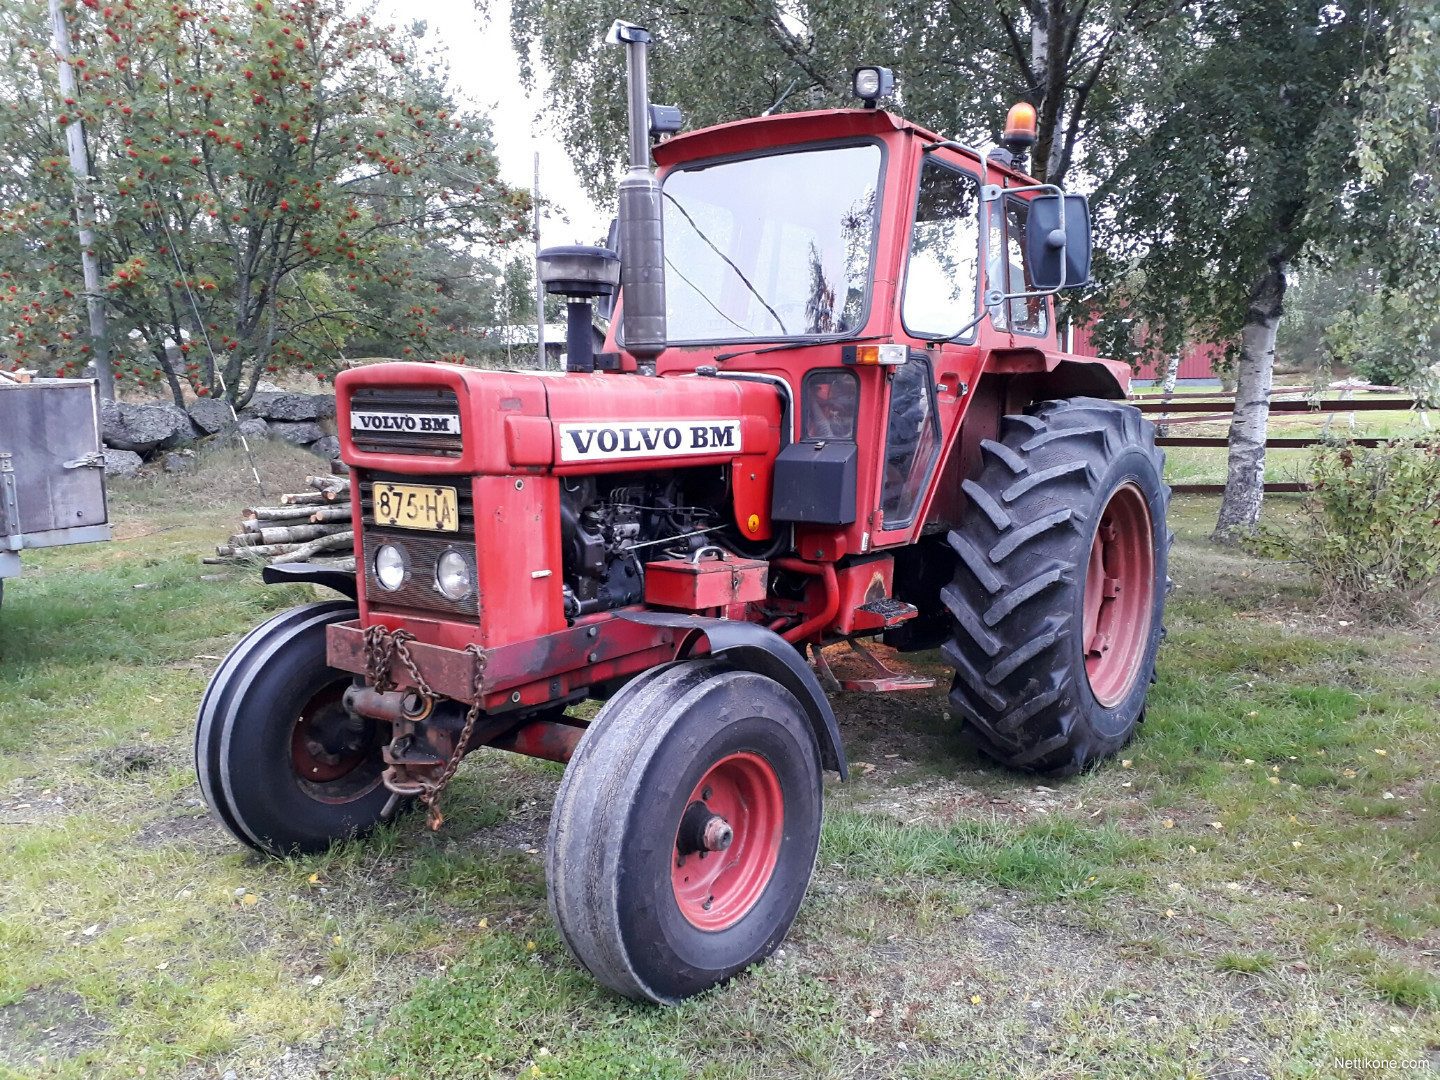 Volvo BM 650 tractors, 1979 - Nettikone